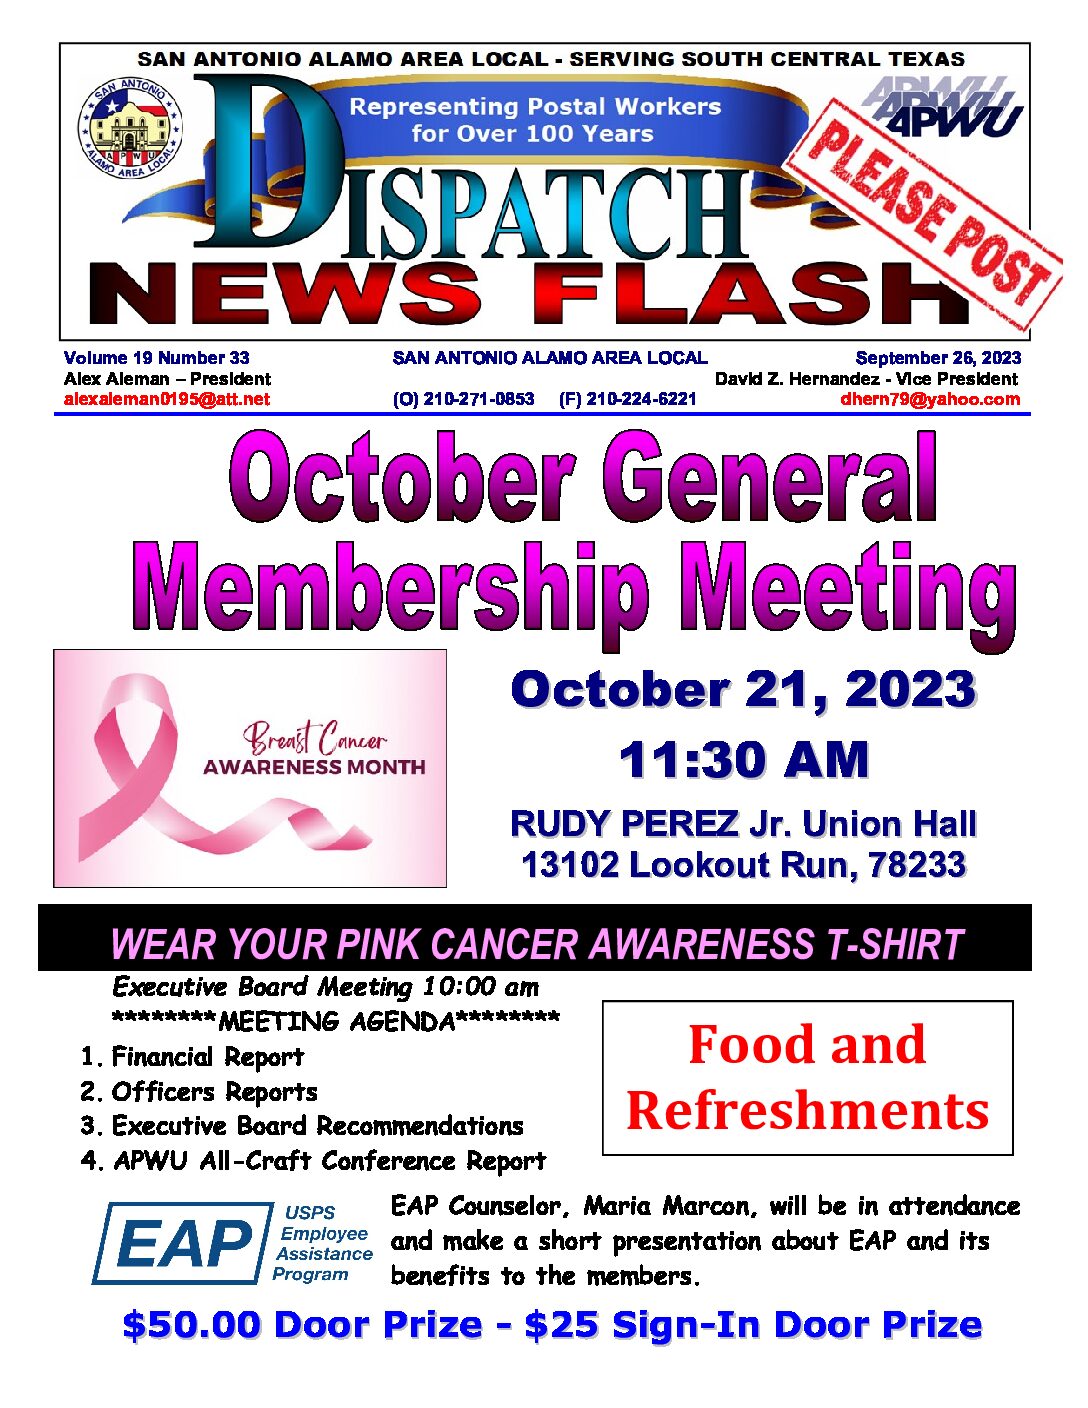 NewsFlash 19-33 October General Membership Meeting Notice - 